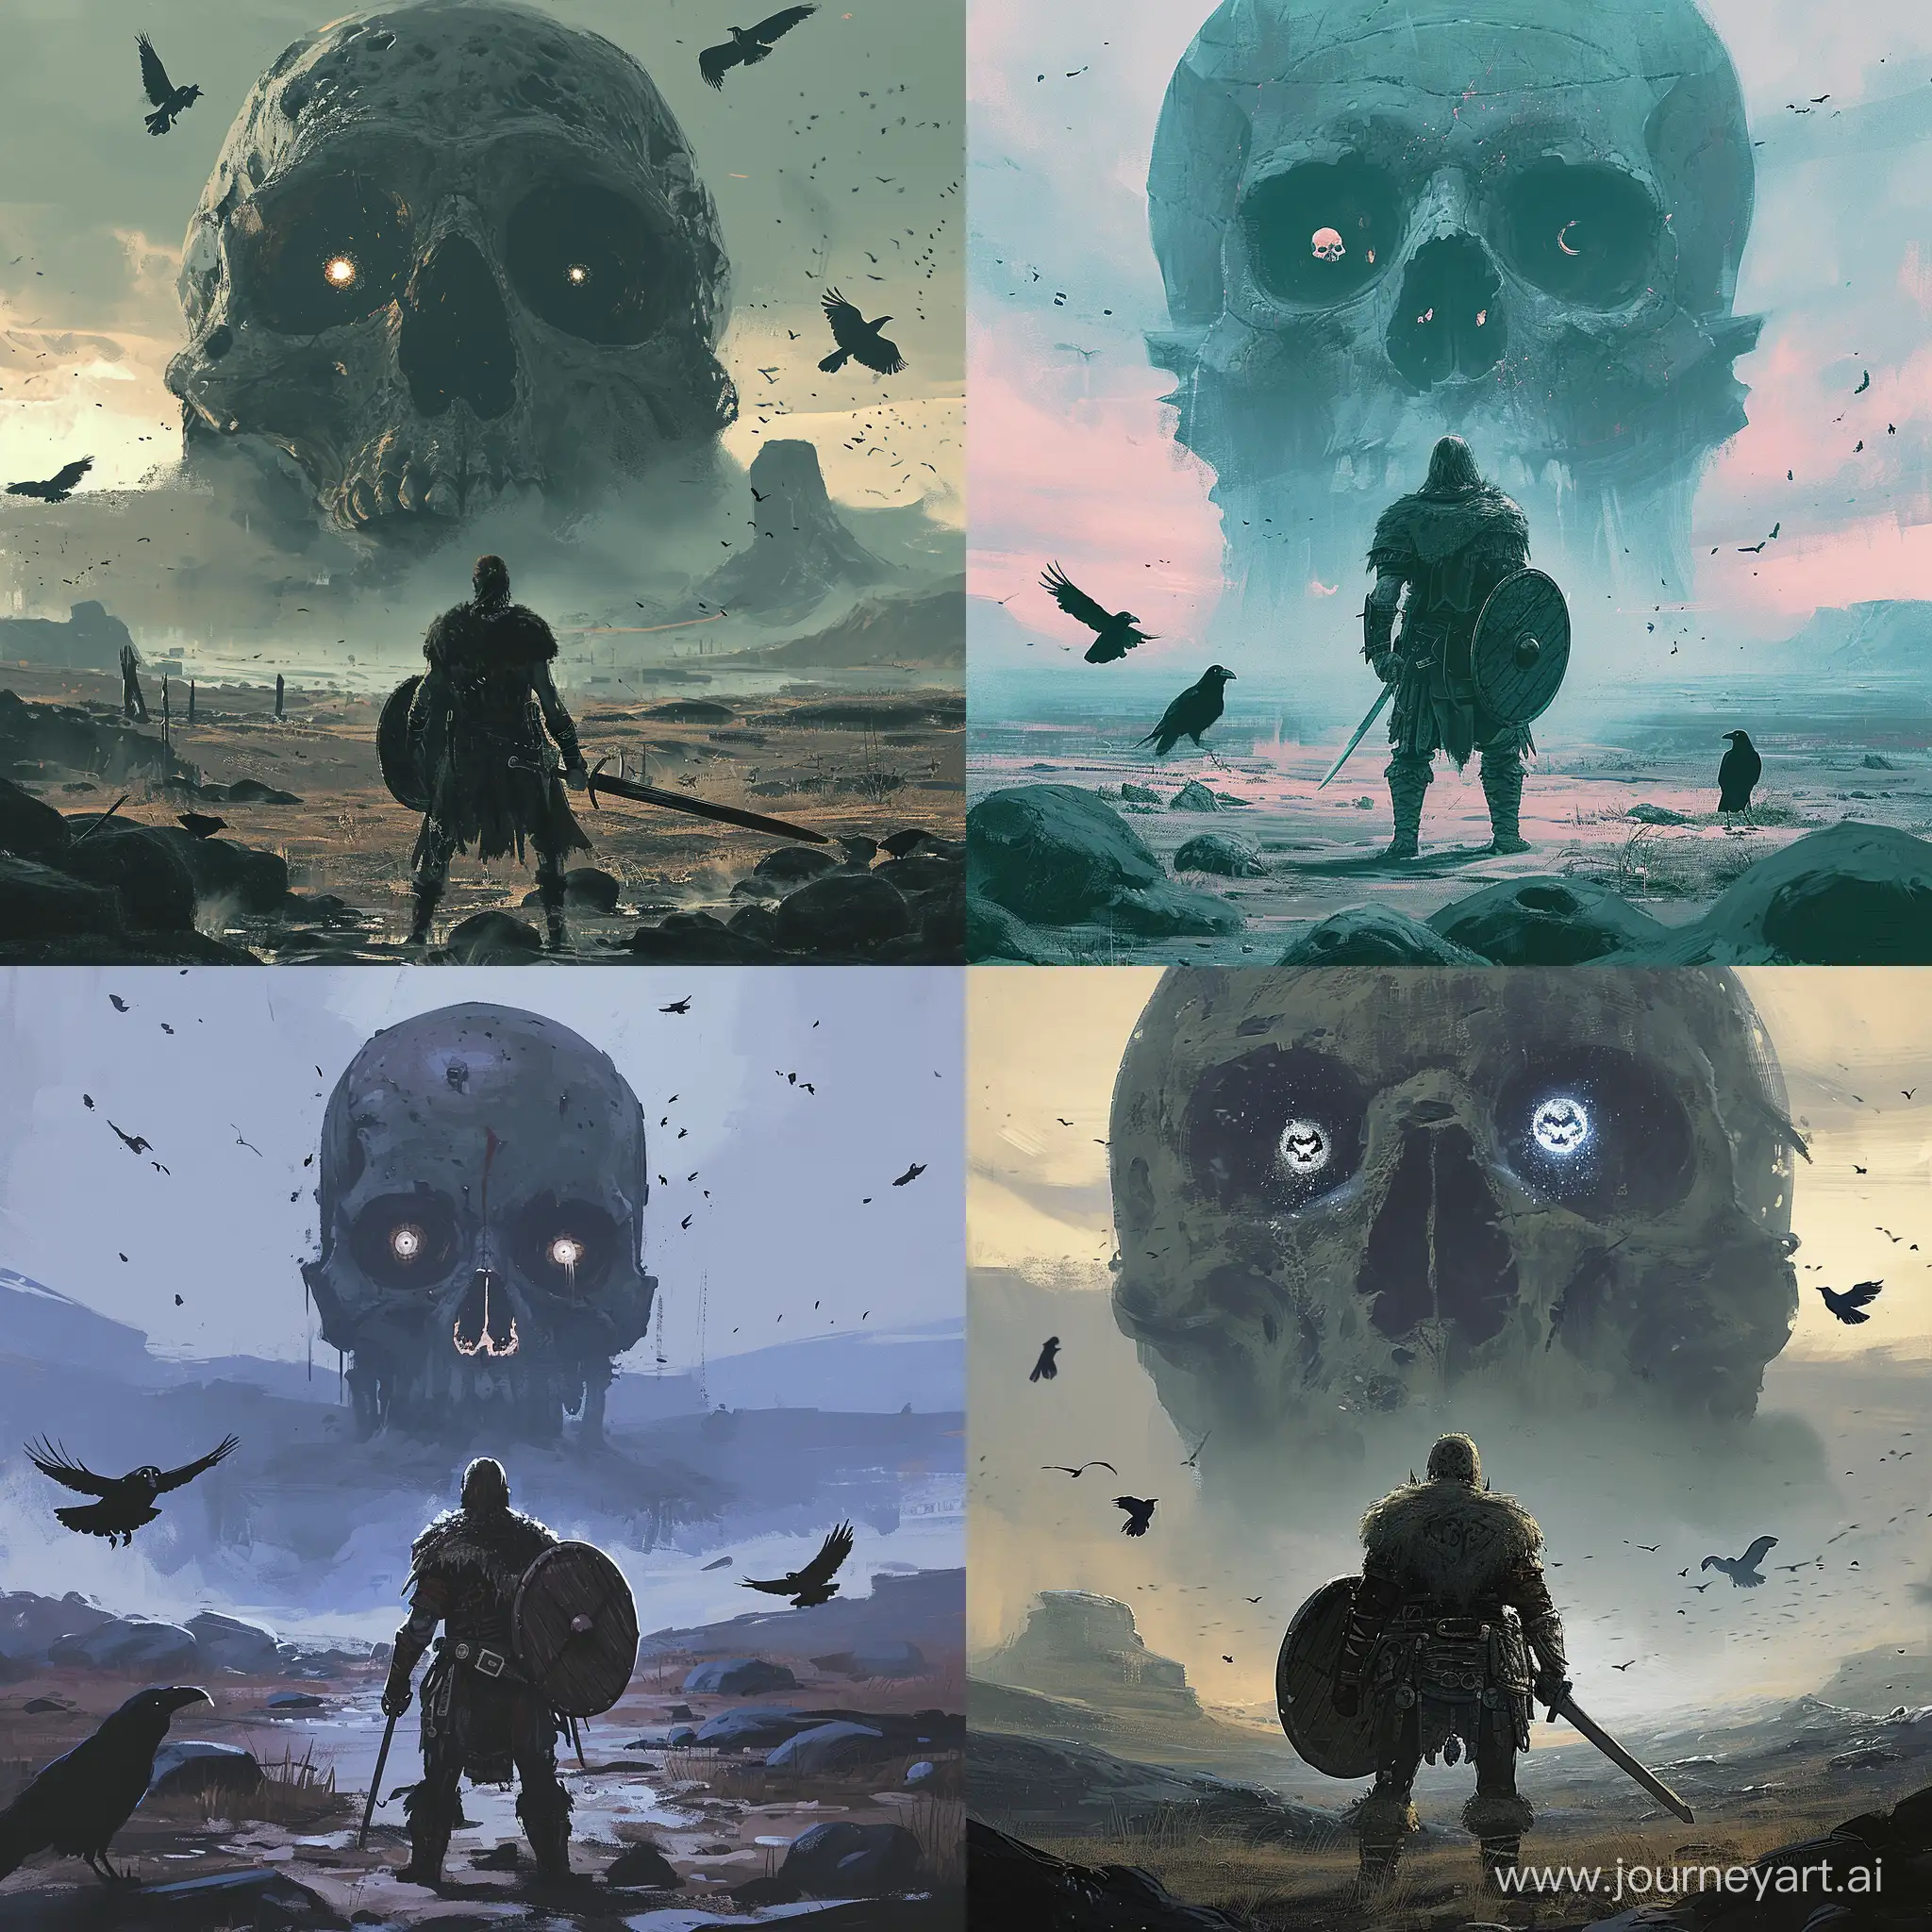 Lone-Warrior-Confronts-Giant-Skull-in-Desolate-Dusk-Landscape